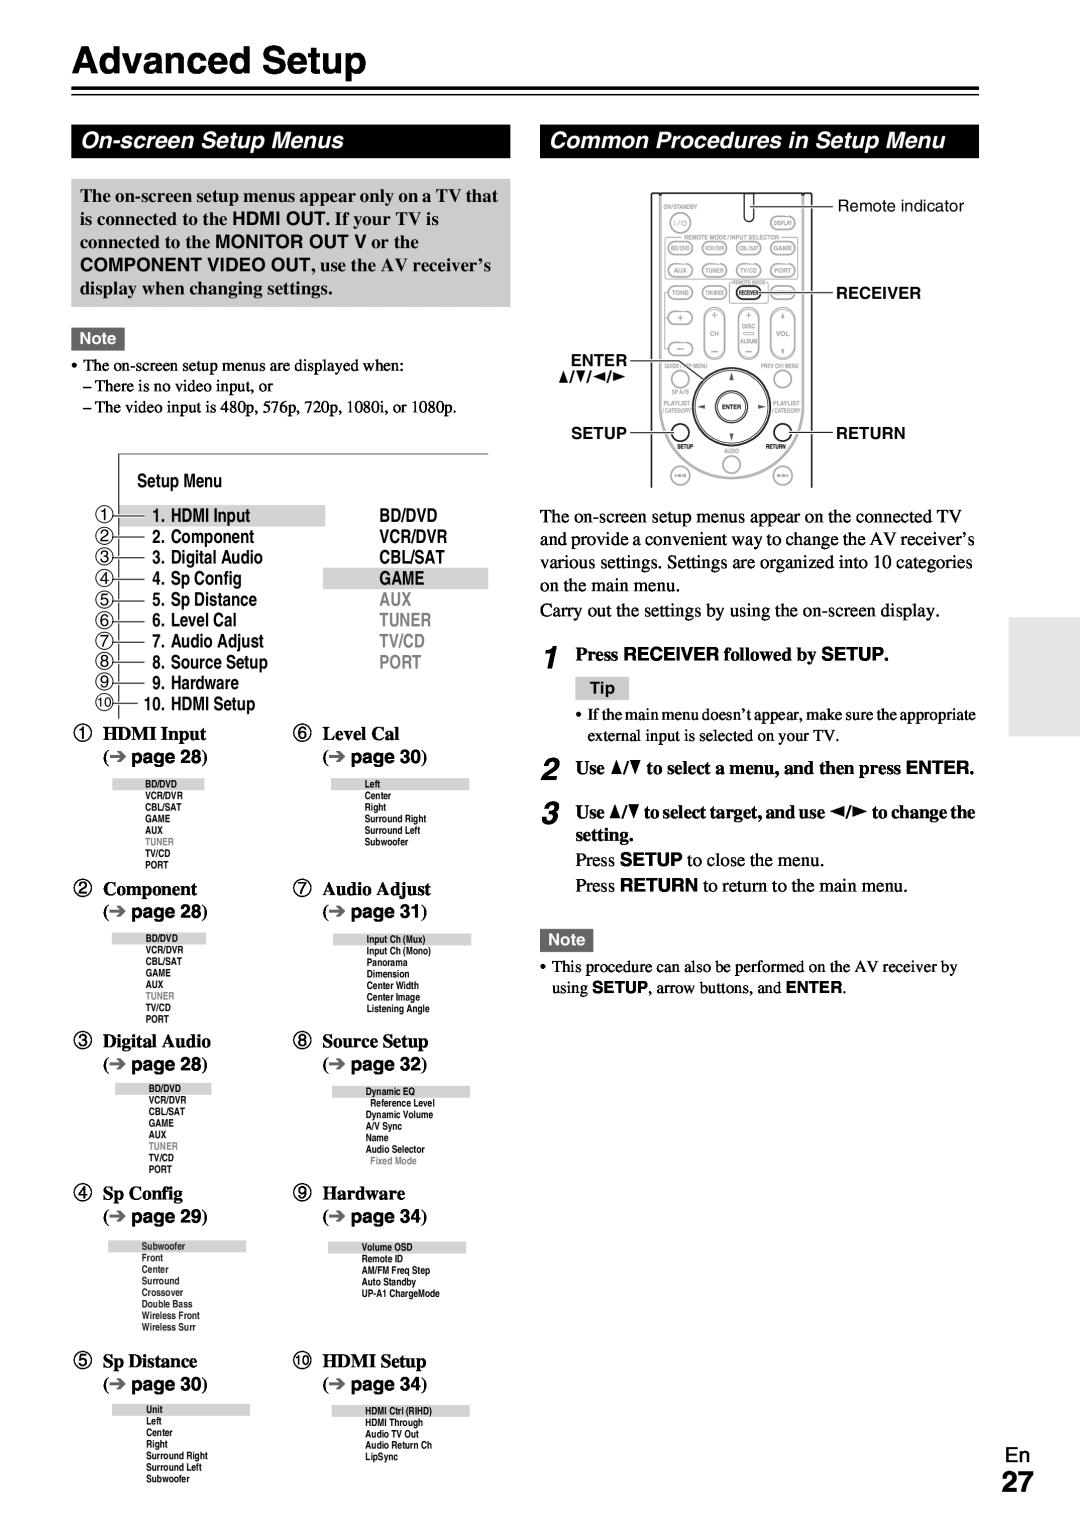 Onkyo HT-R390 Advanced Setup, On-screenSetup Menus, Common Procedures in Setup Menu, page, Bd/Dvd, Cbl/Sat Game 